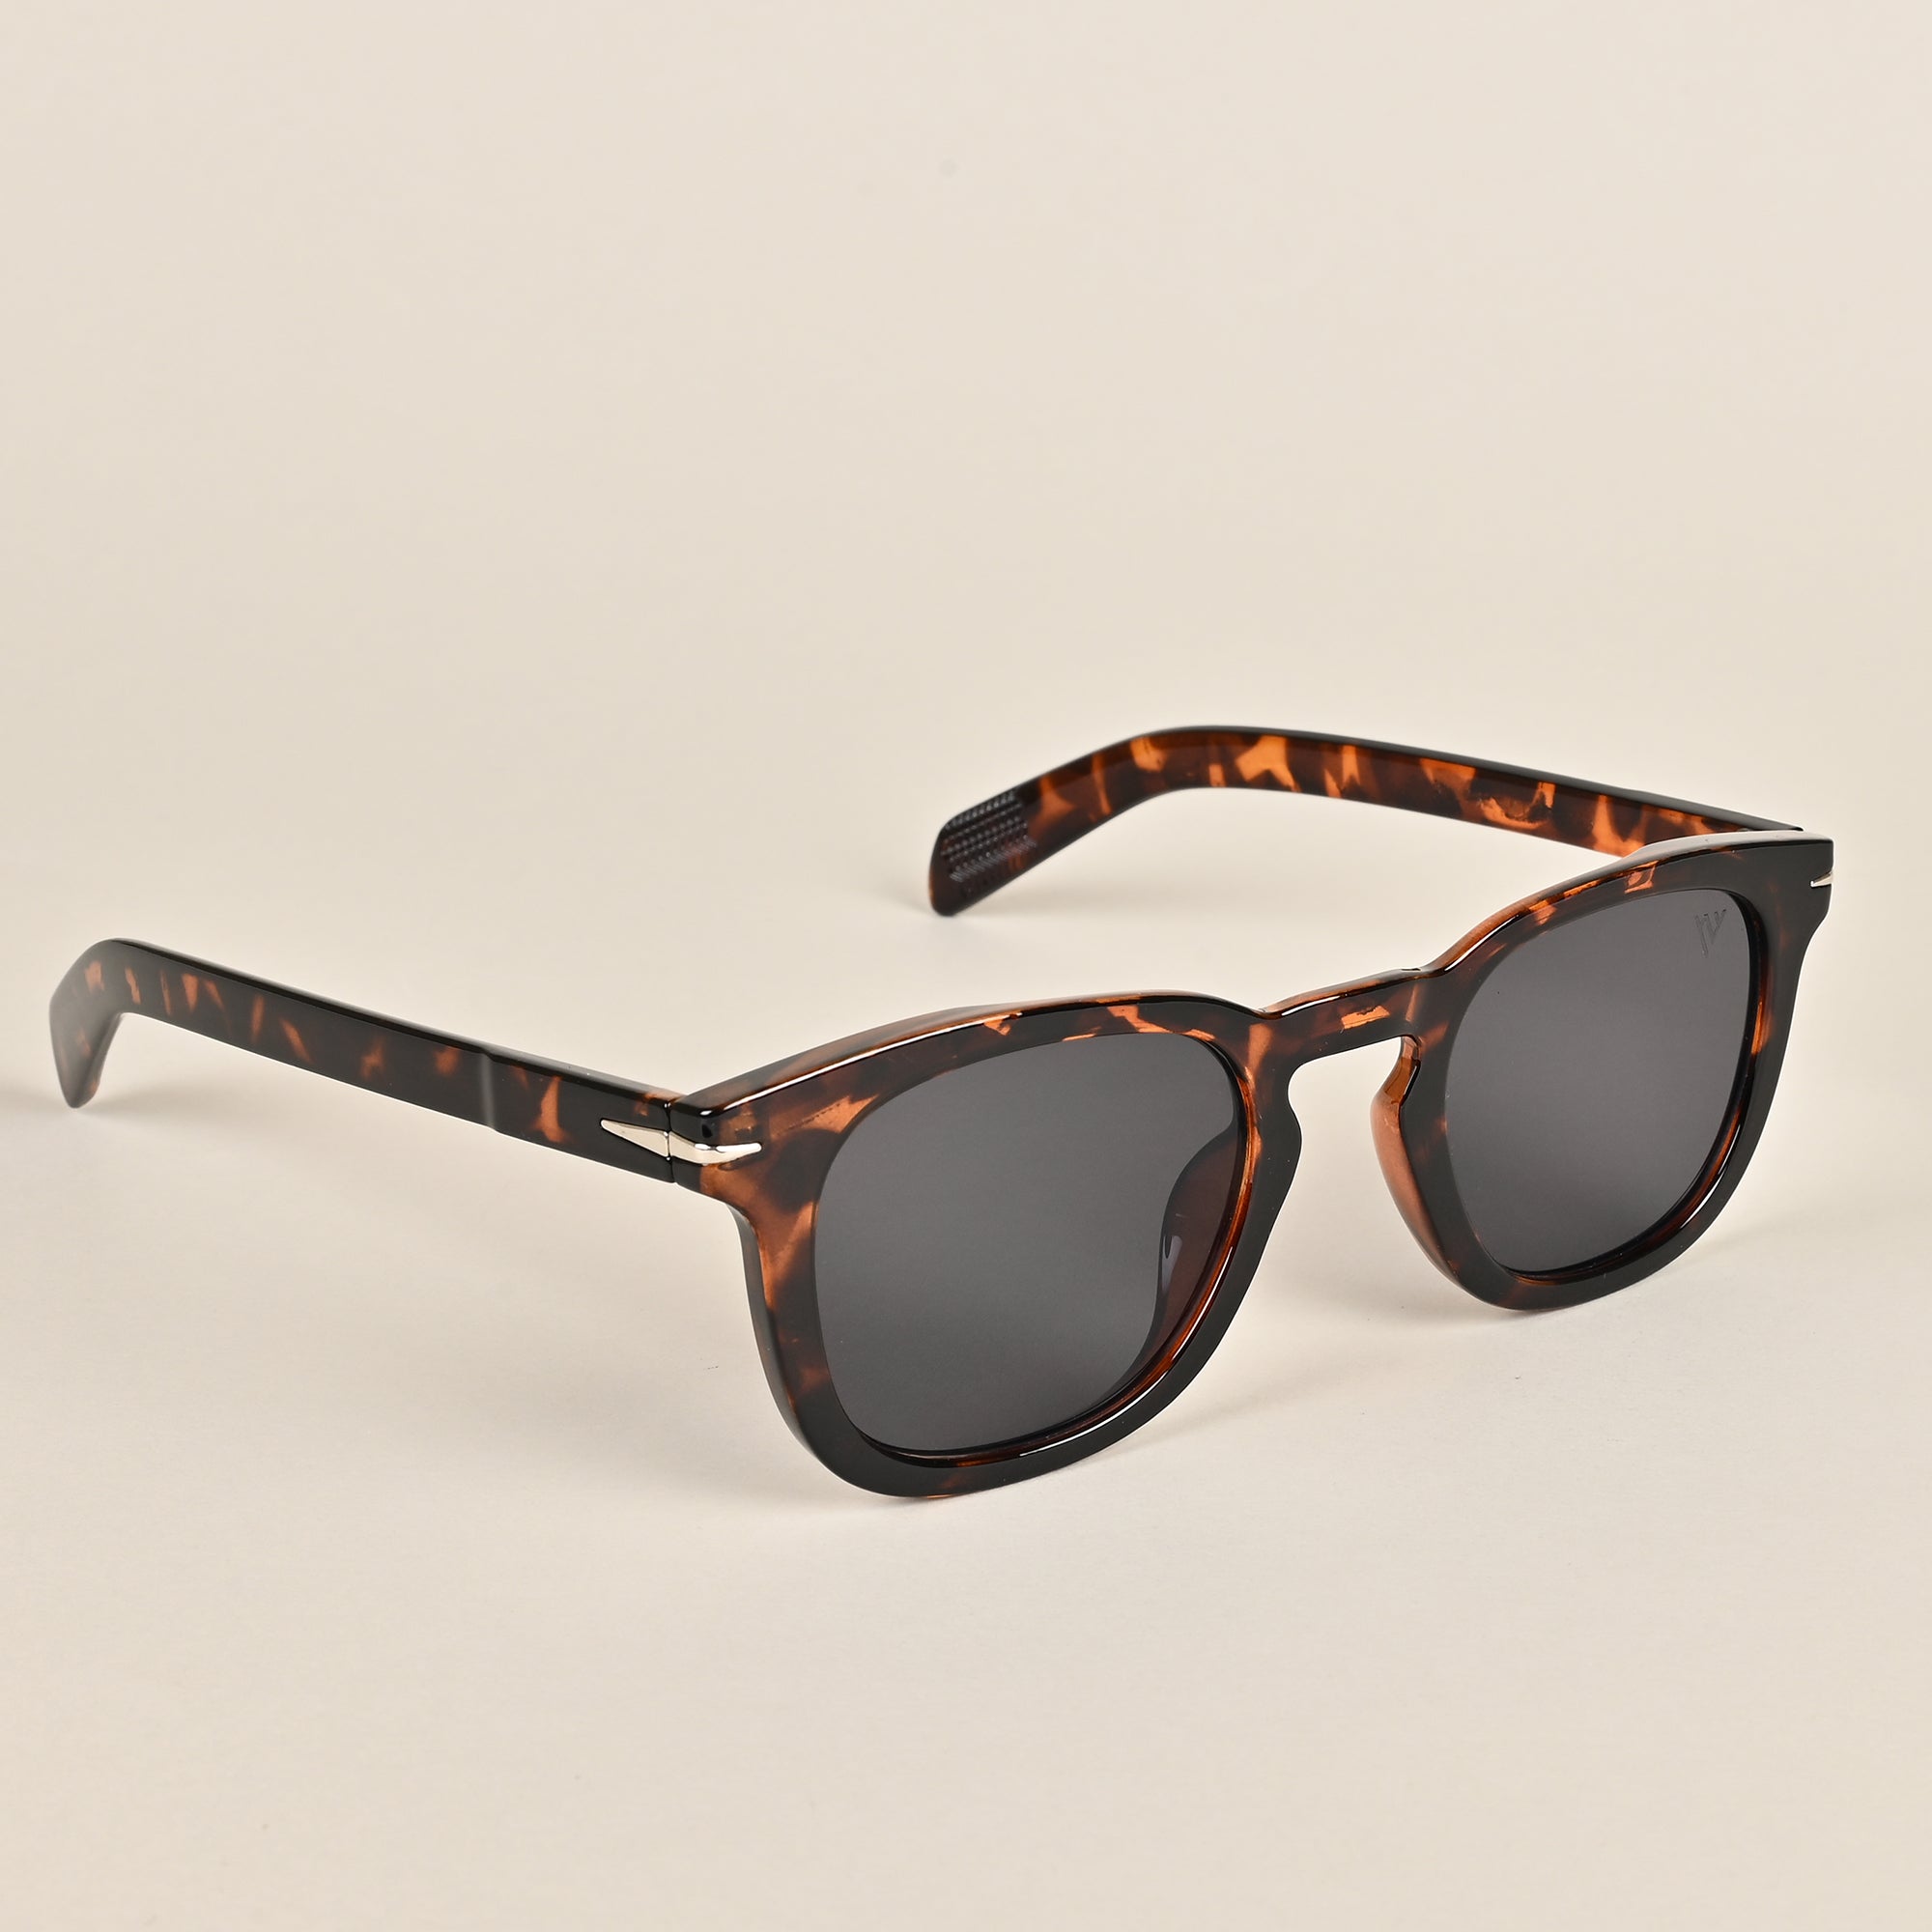 Voyage Black Square Sunglasses - MG3916